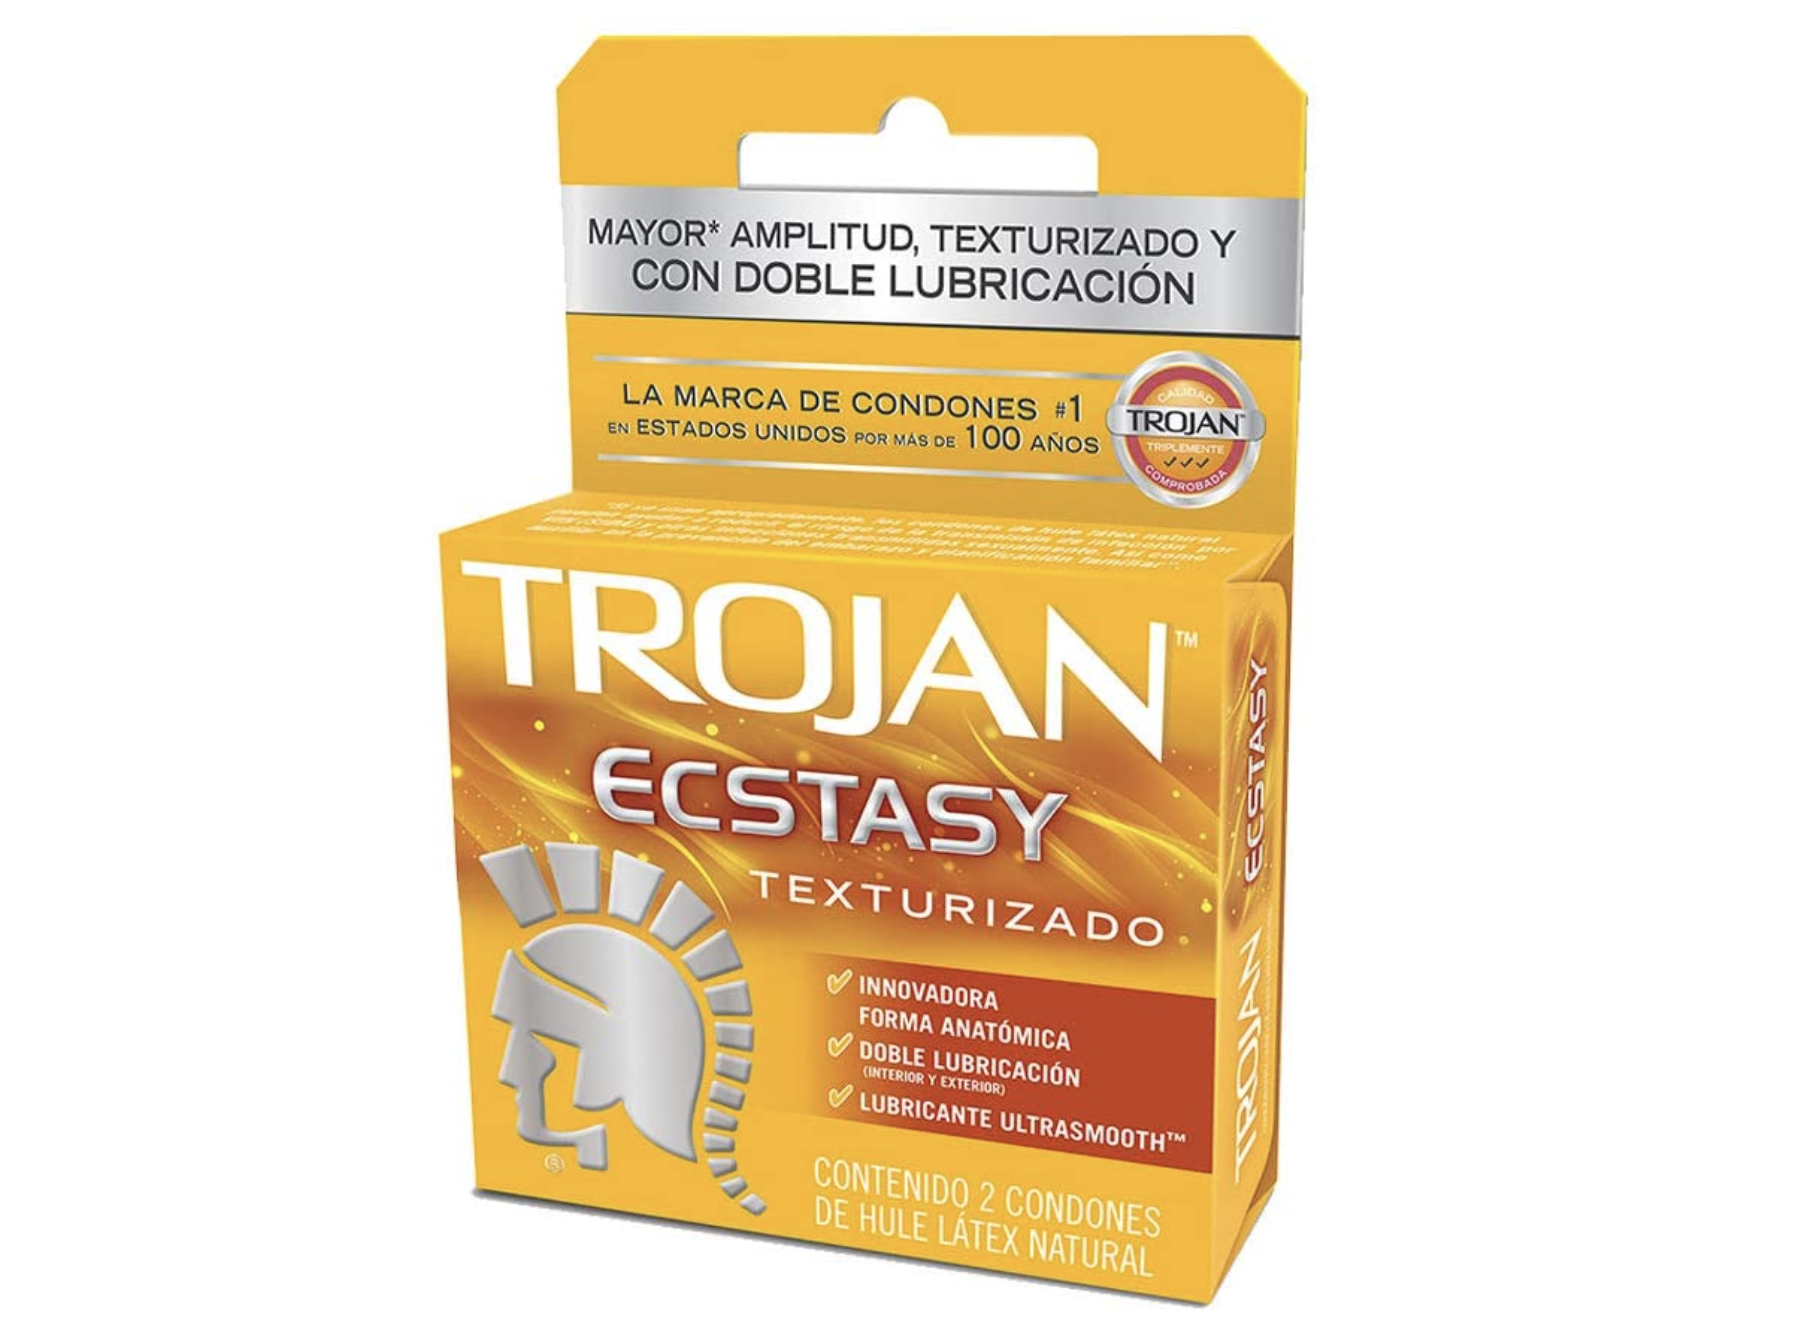 Dops condones trojan texturizados